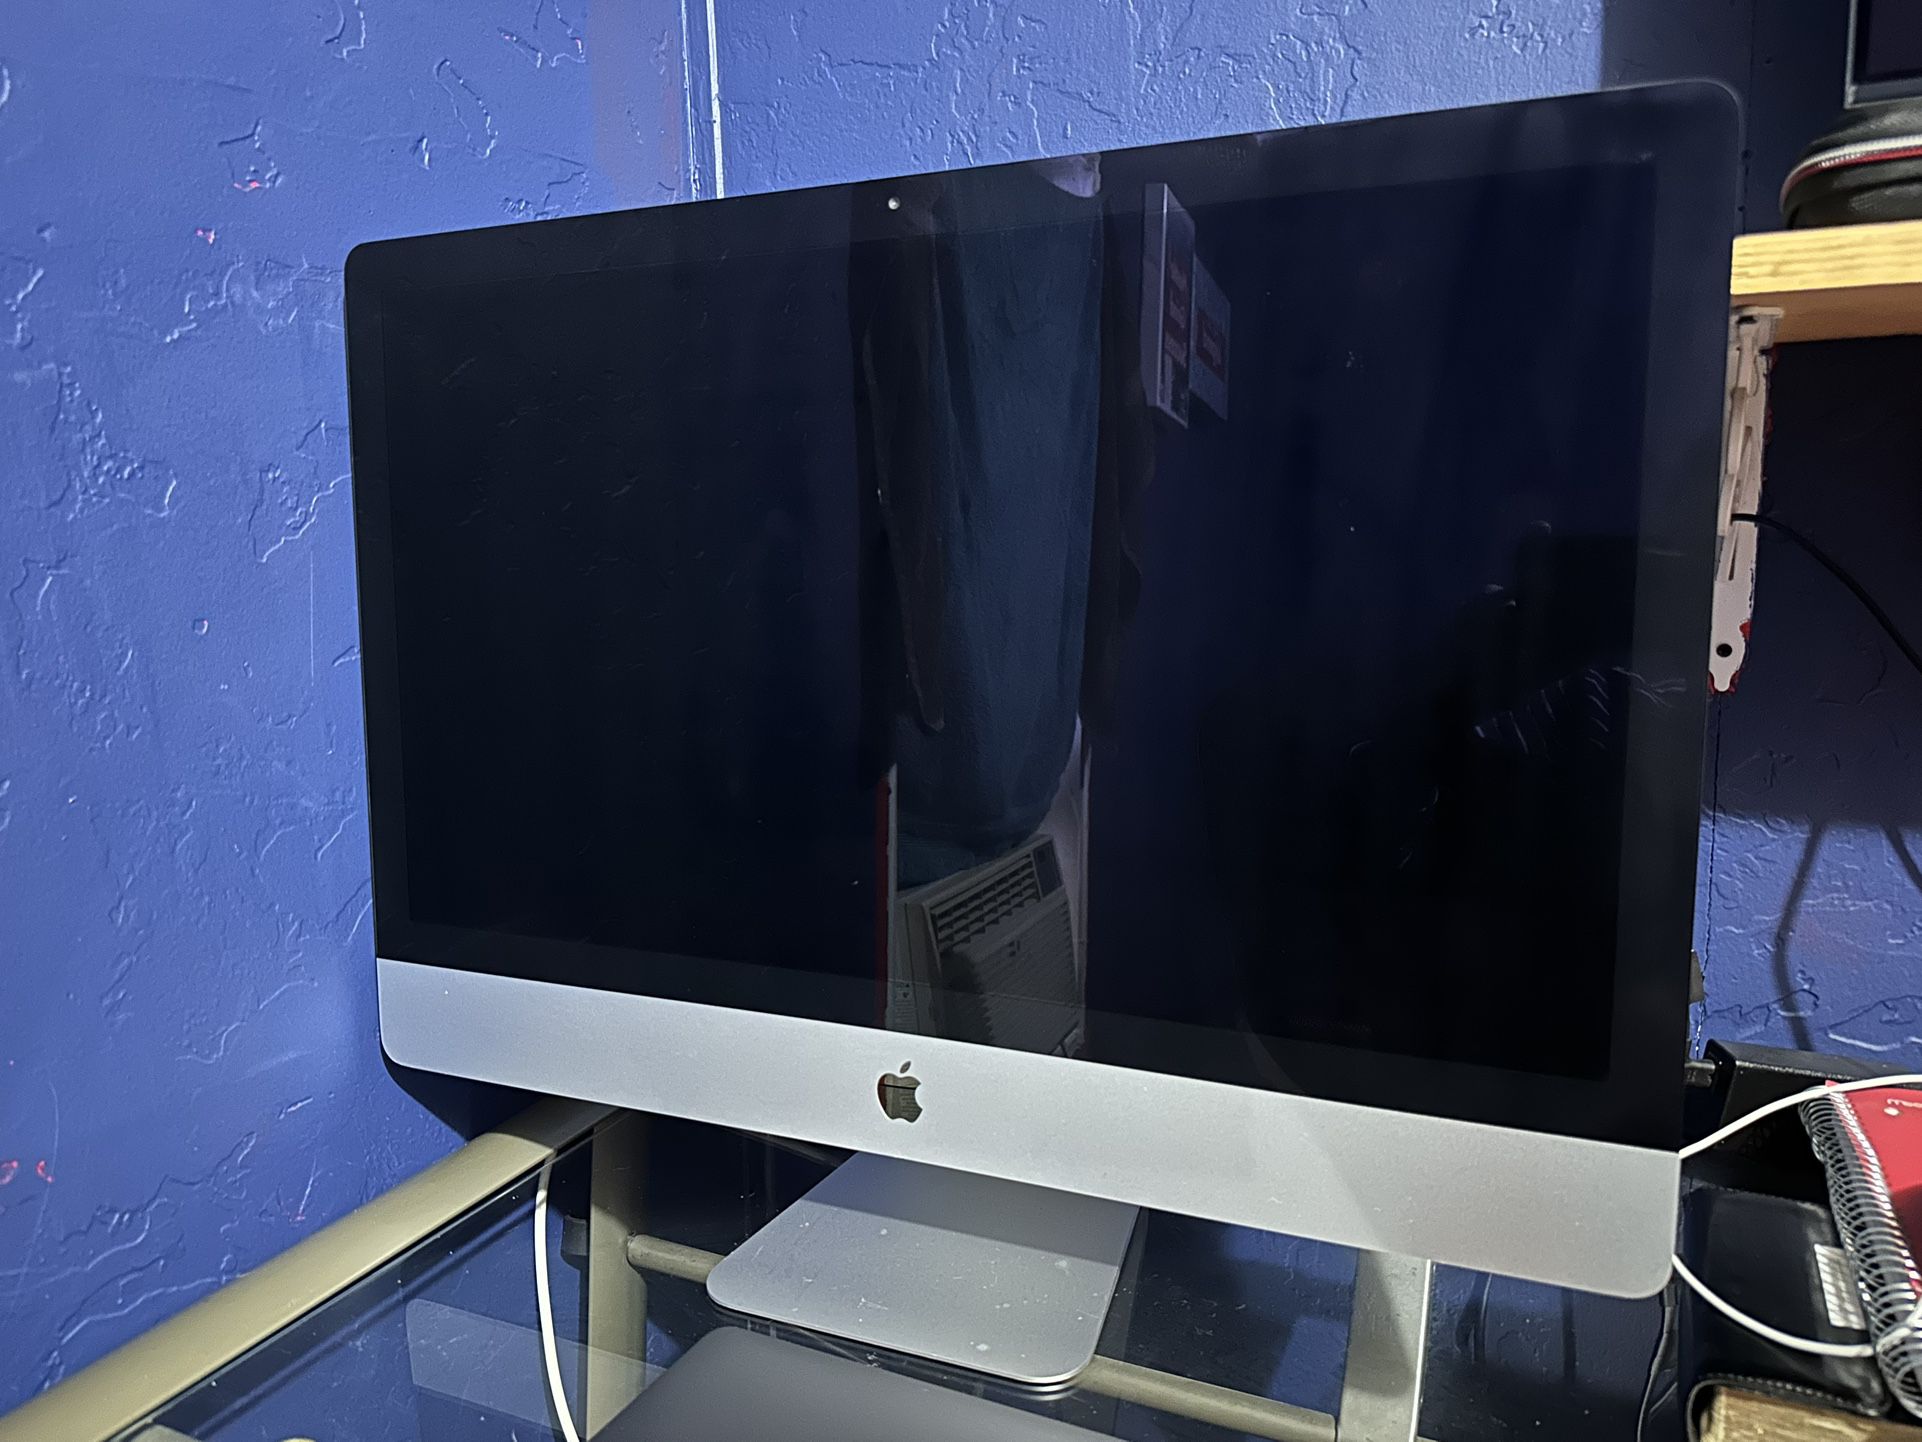 iMac (2013)